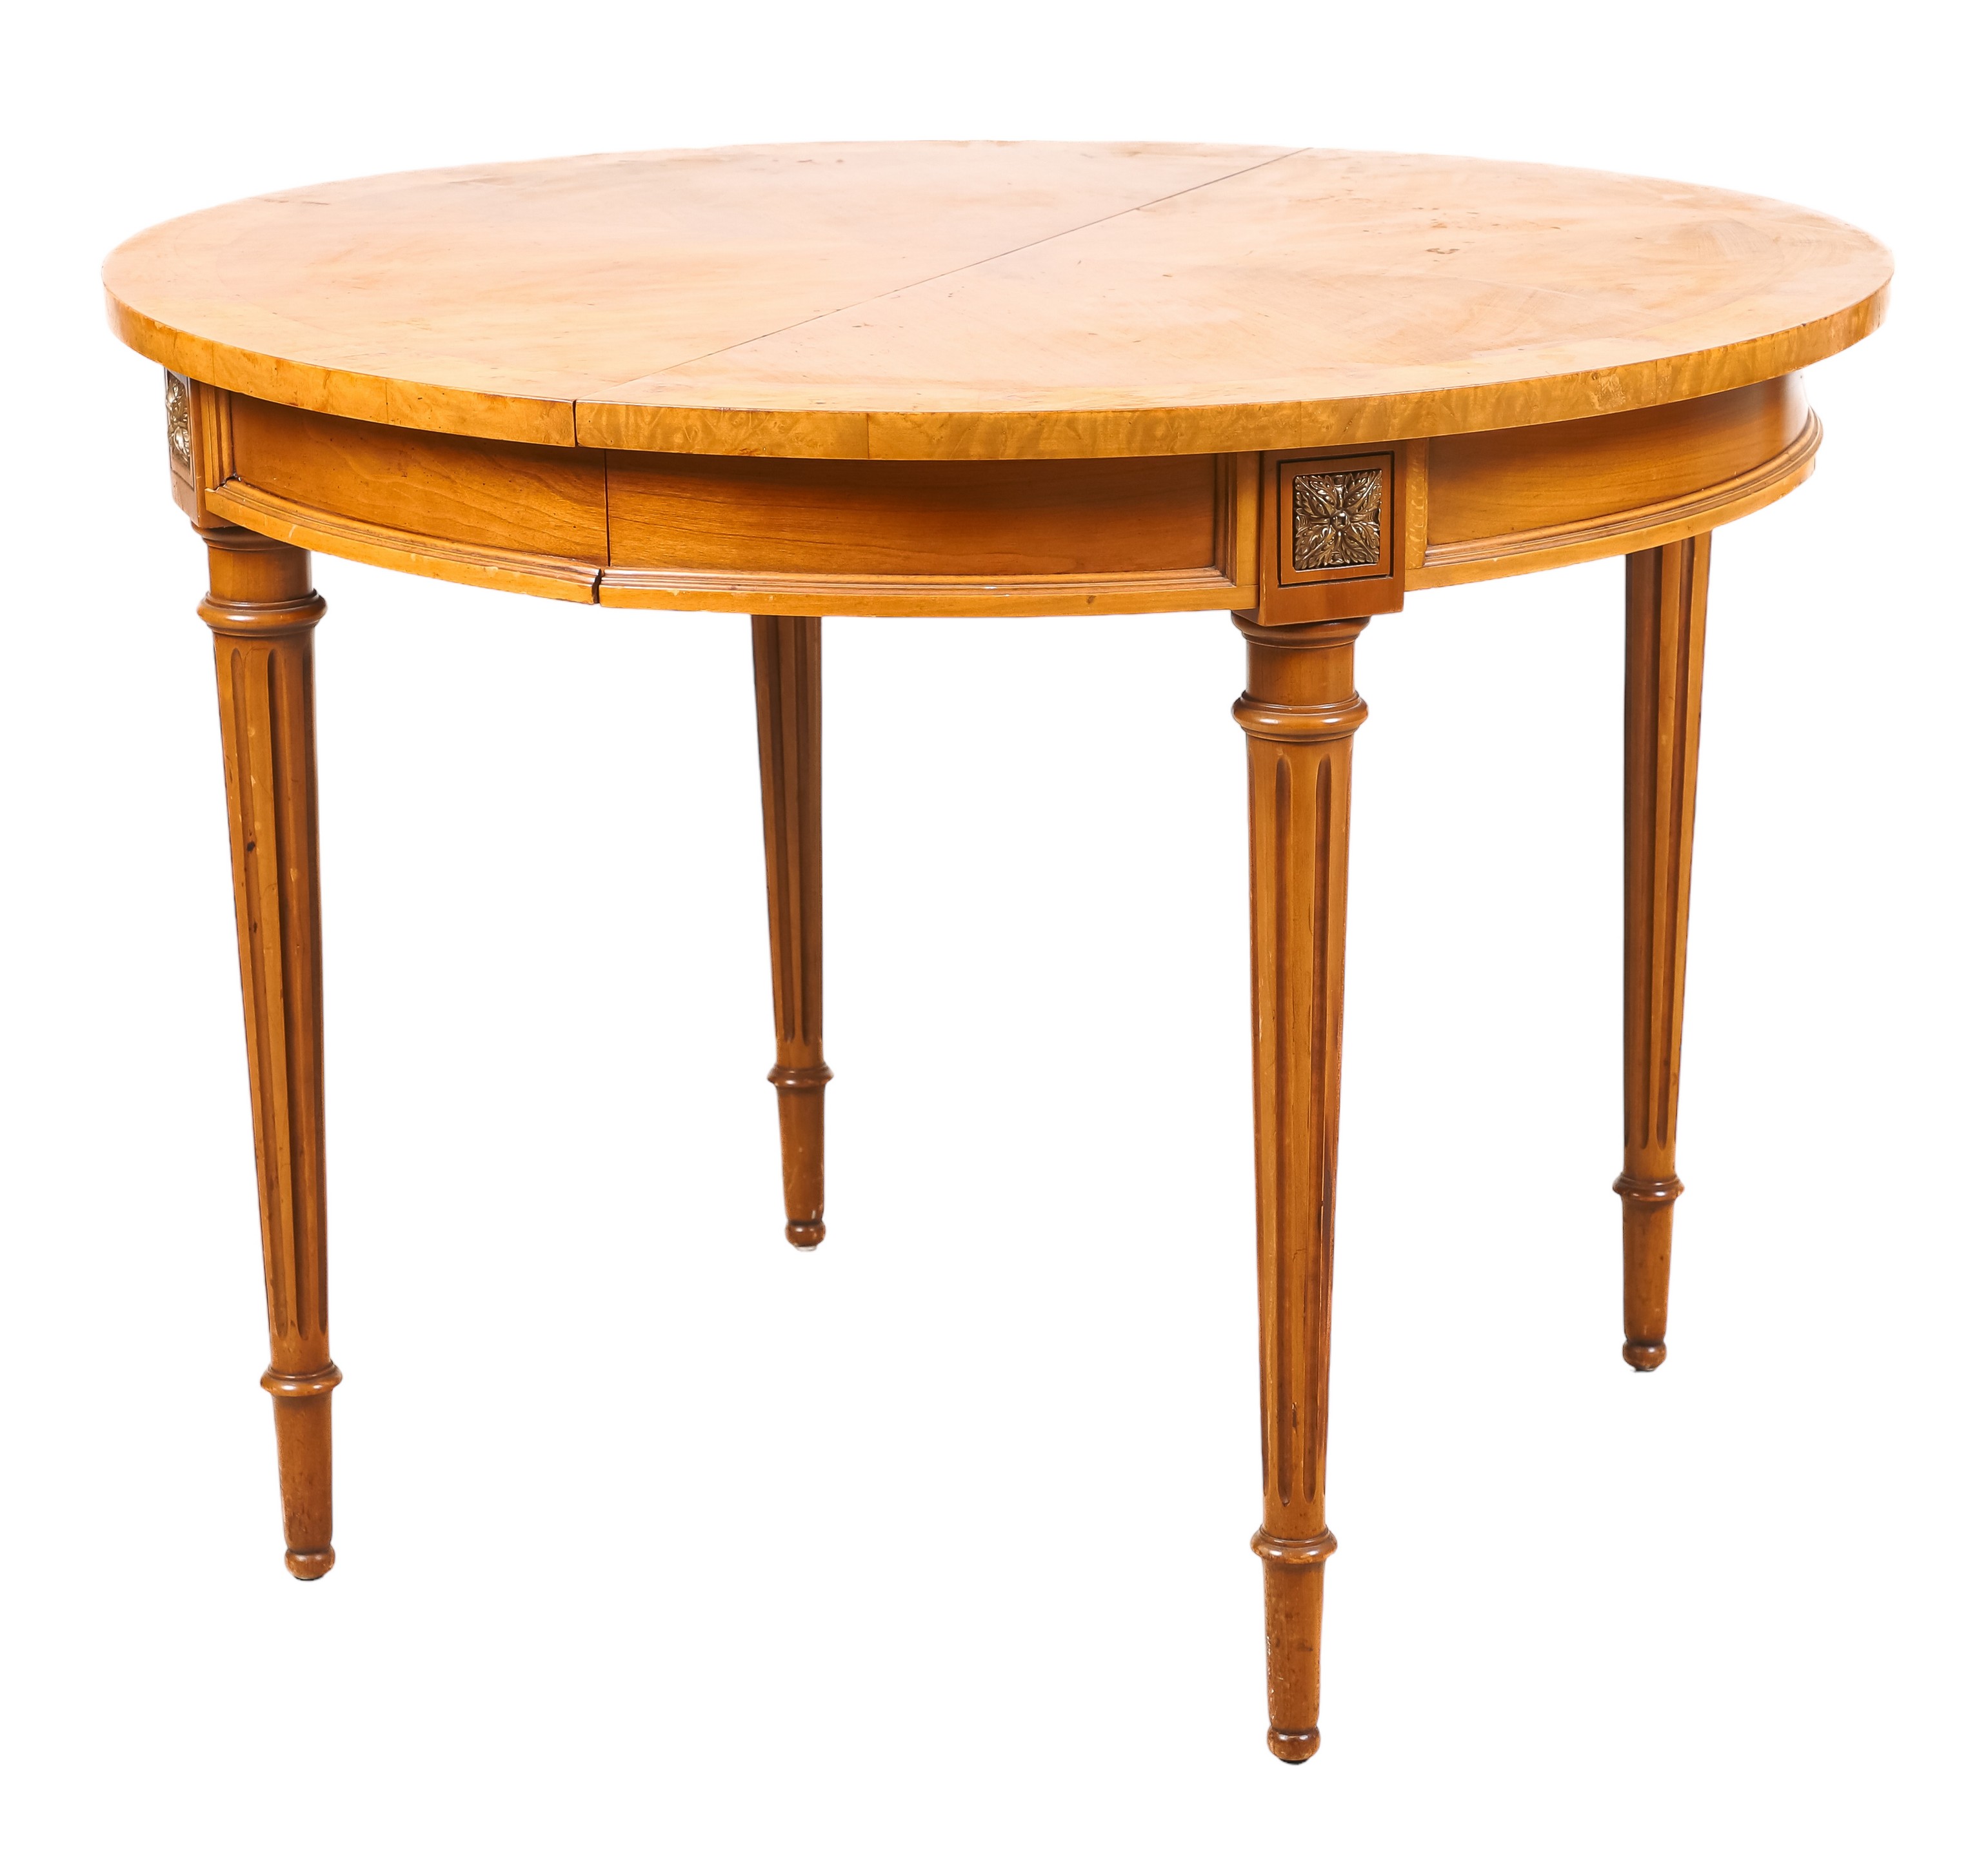 Louis XVI style dining table gilt 2e124b